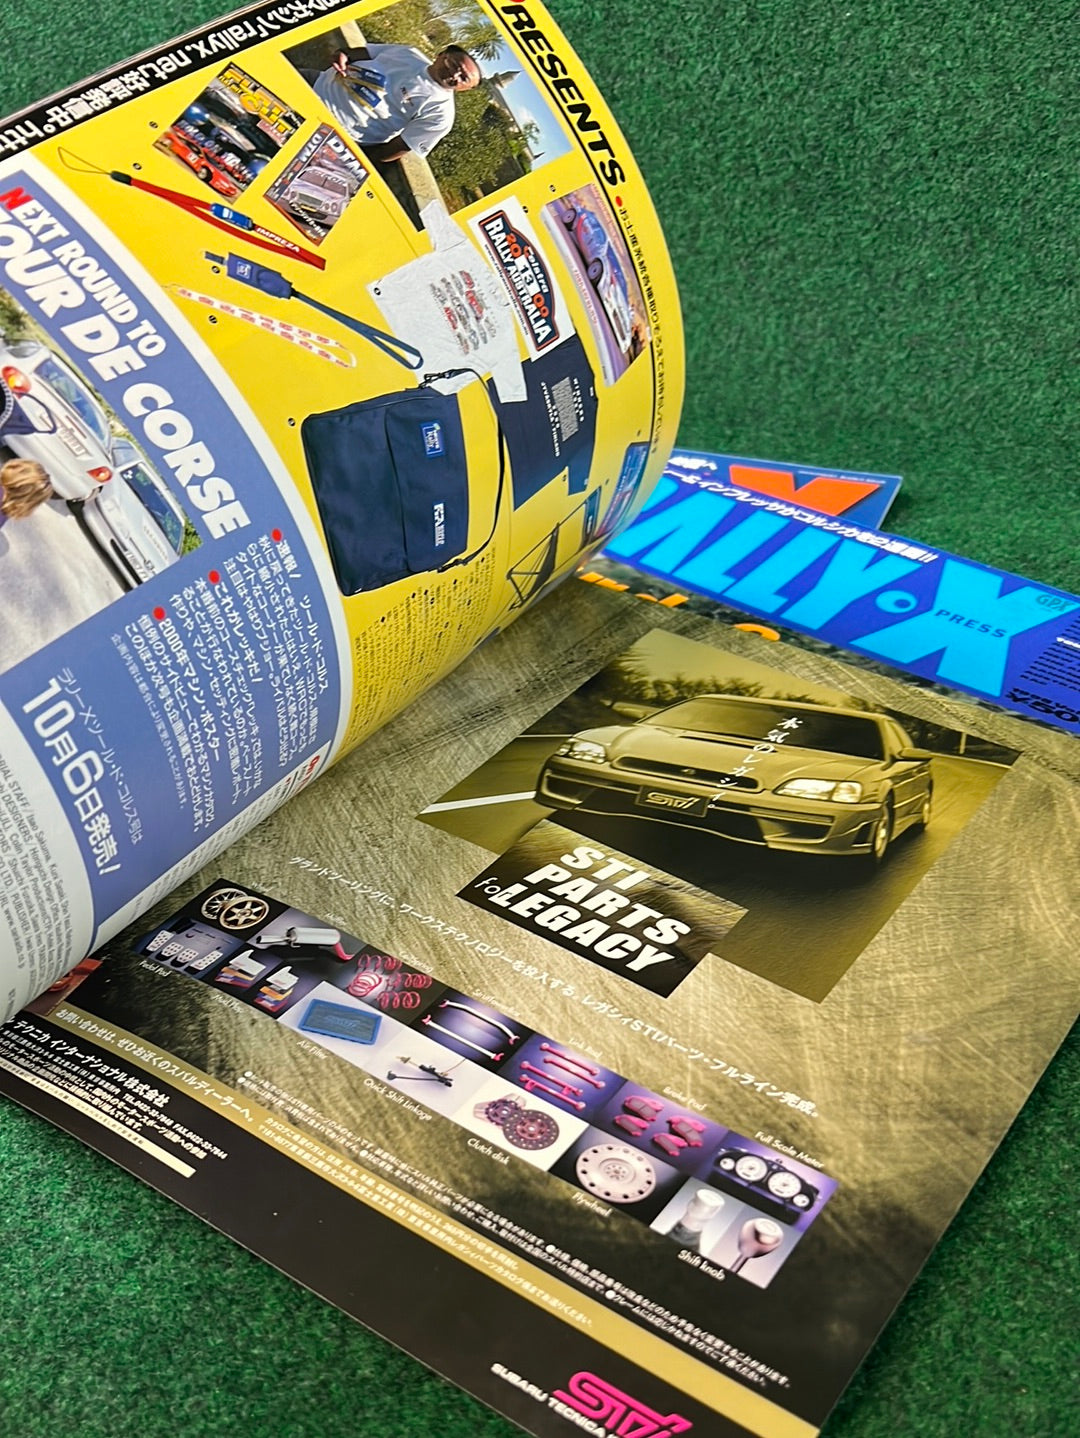 Rally Xpress Magazine - Peugeot Set of 3